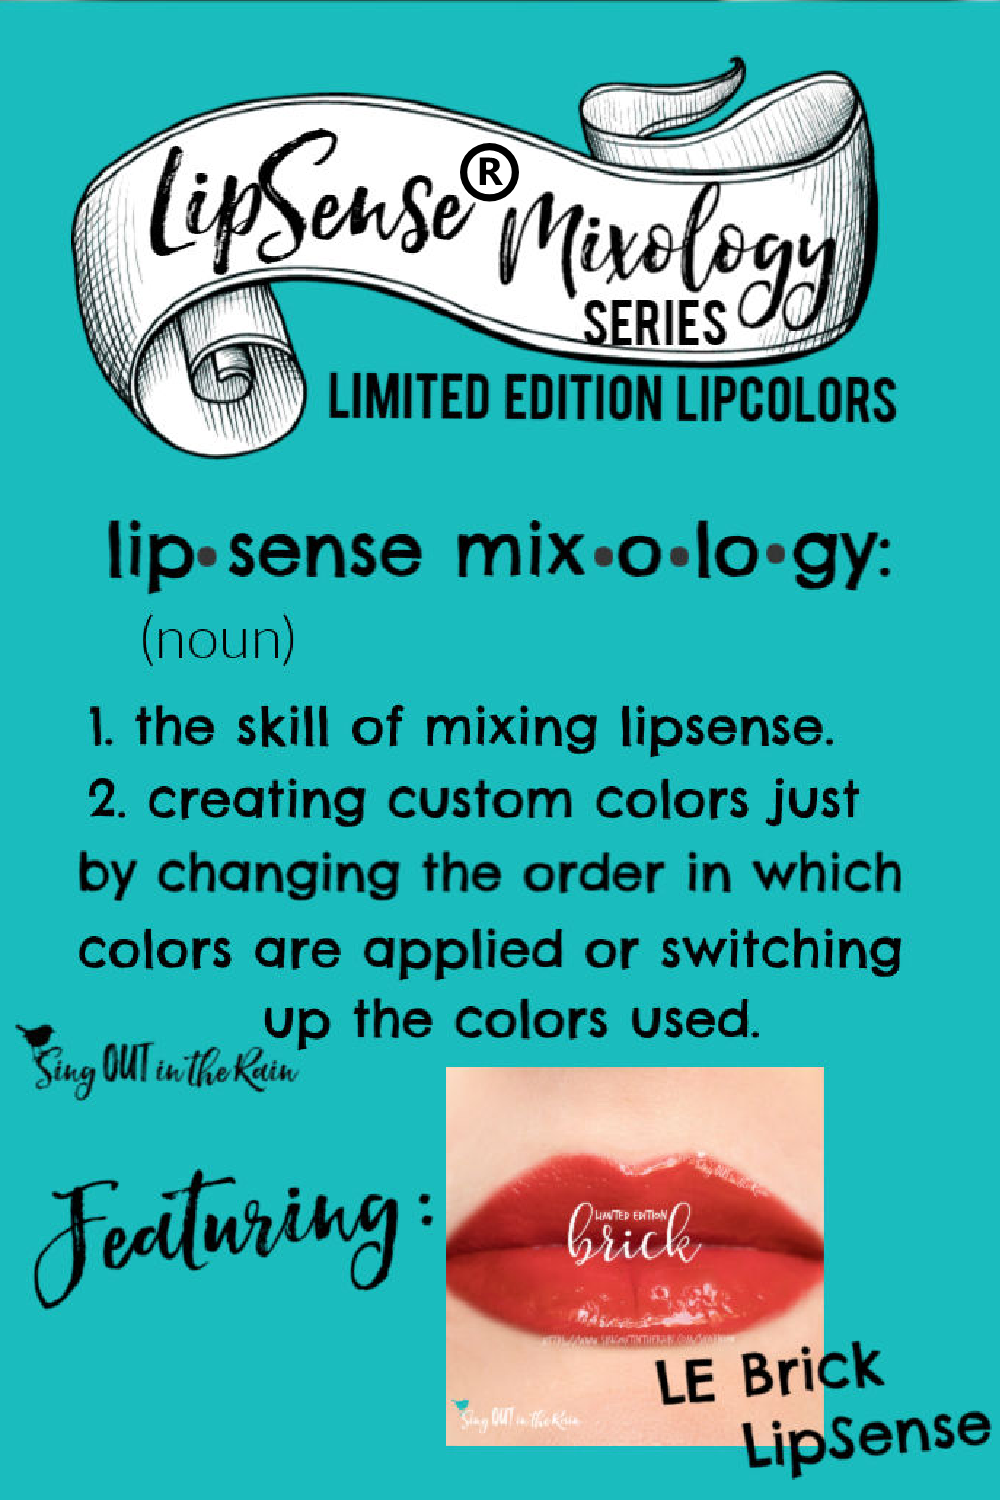 The Ultimate Guide to Brick LipSense Mixology